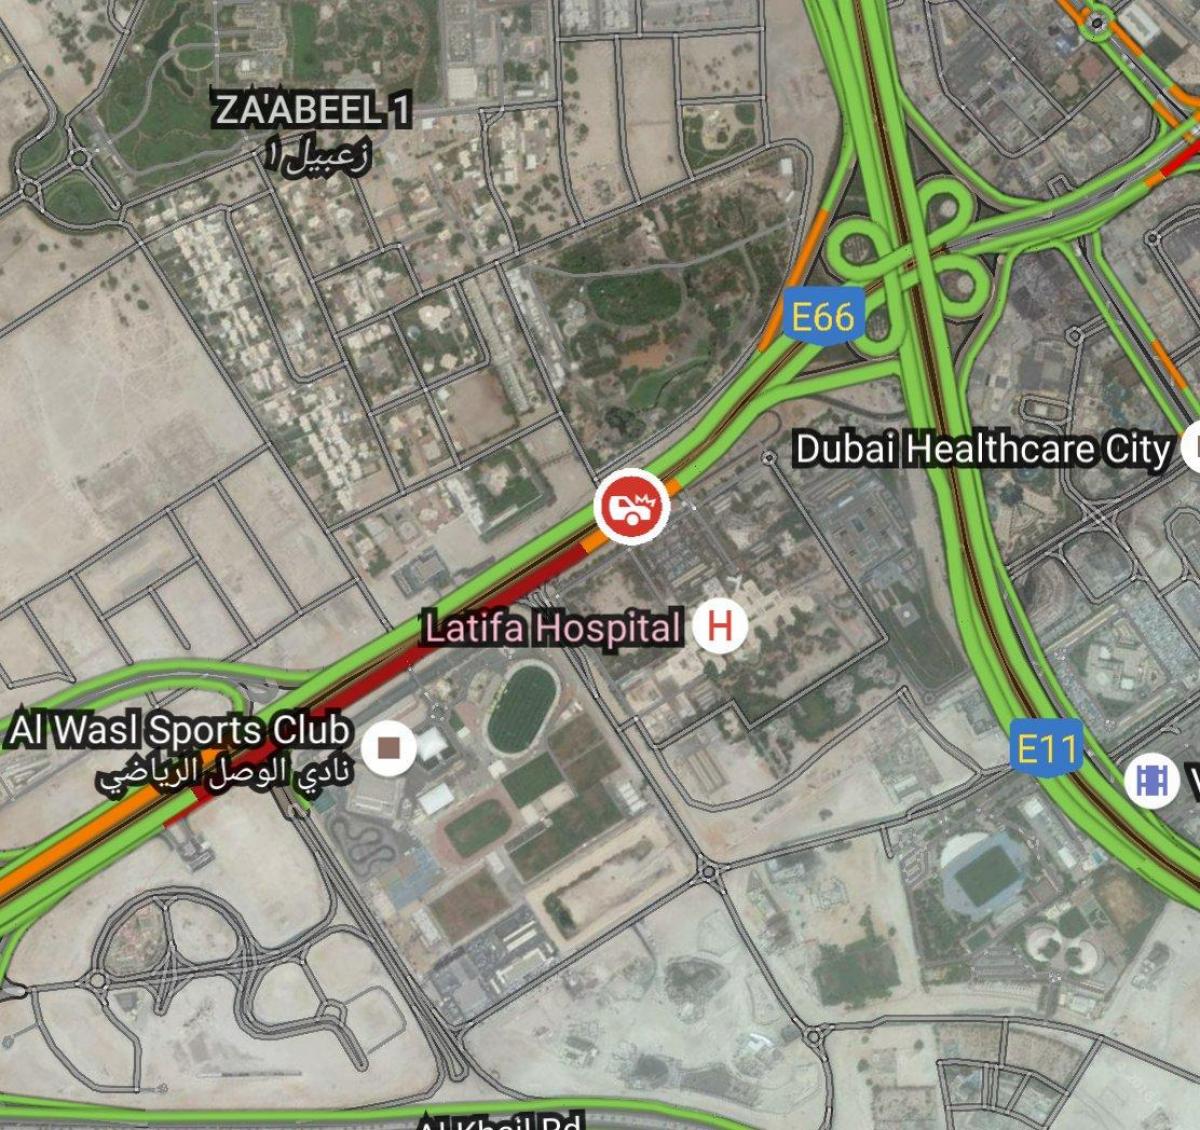 latifa sjukhus läge i Dubai karta